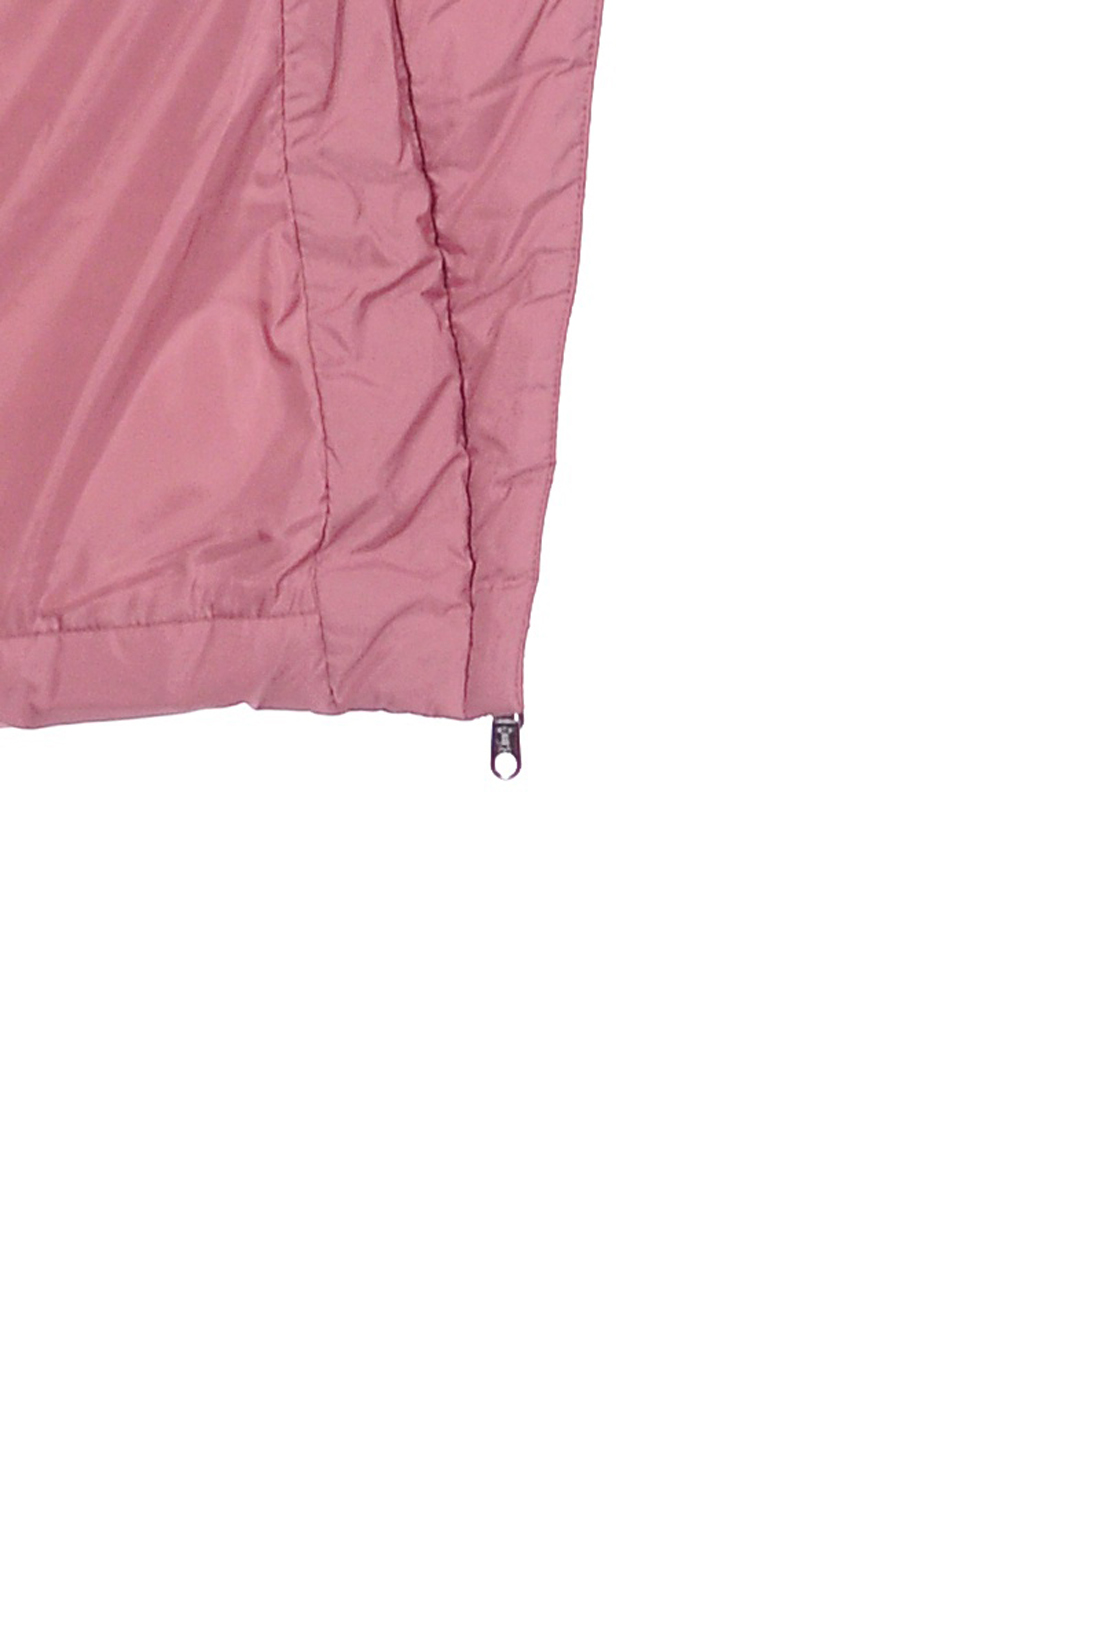 Пуховик с наклонной застёжкой (арт. baon B009501), размер XXL, цвет розовый Пуховик с наклонной застёжкой (арт. baon B009501) - фото 3